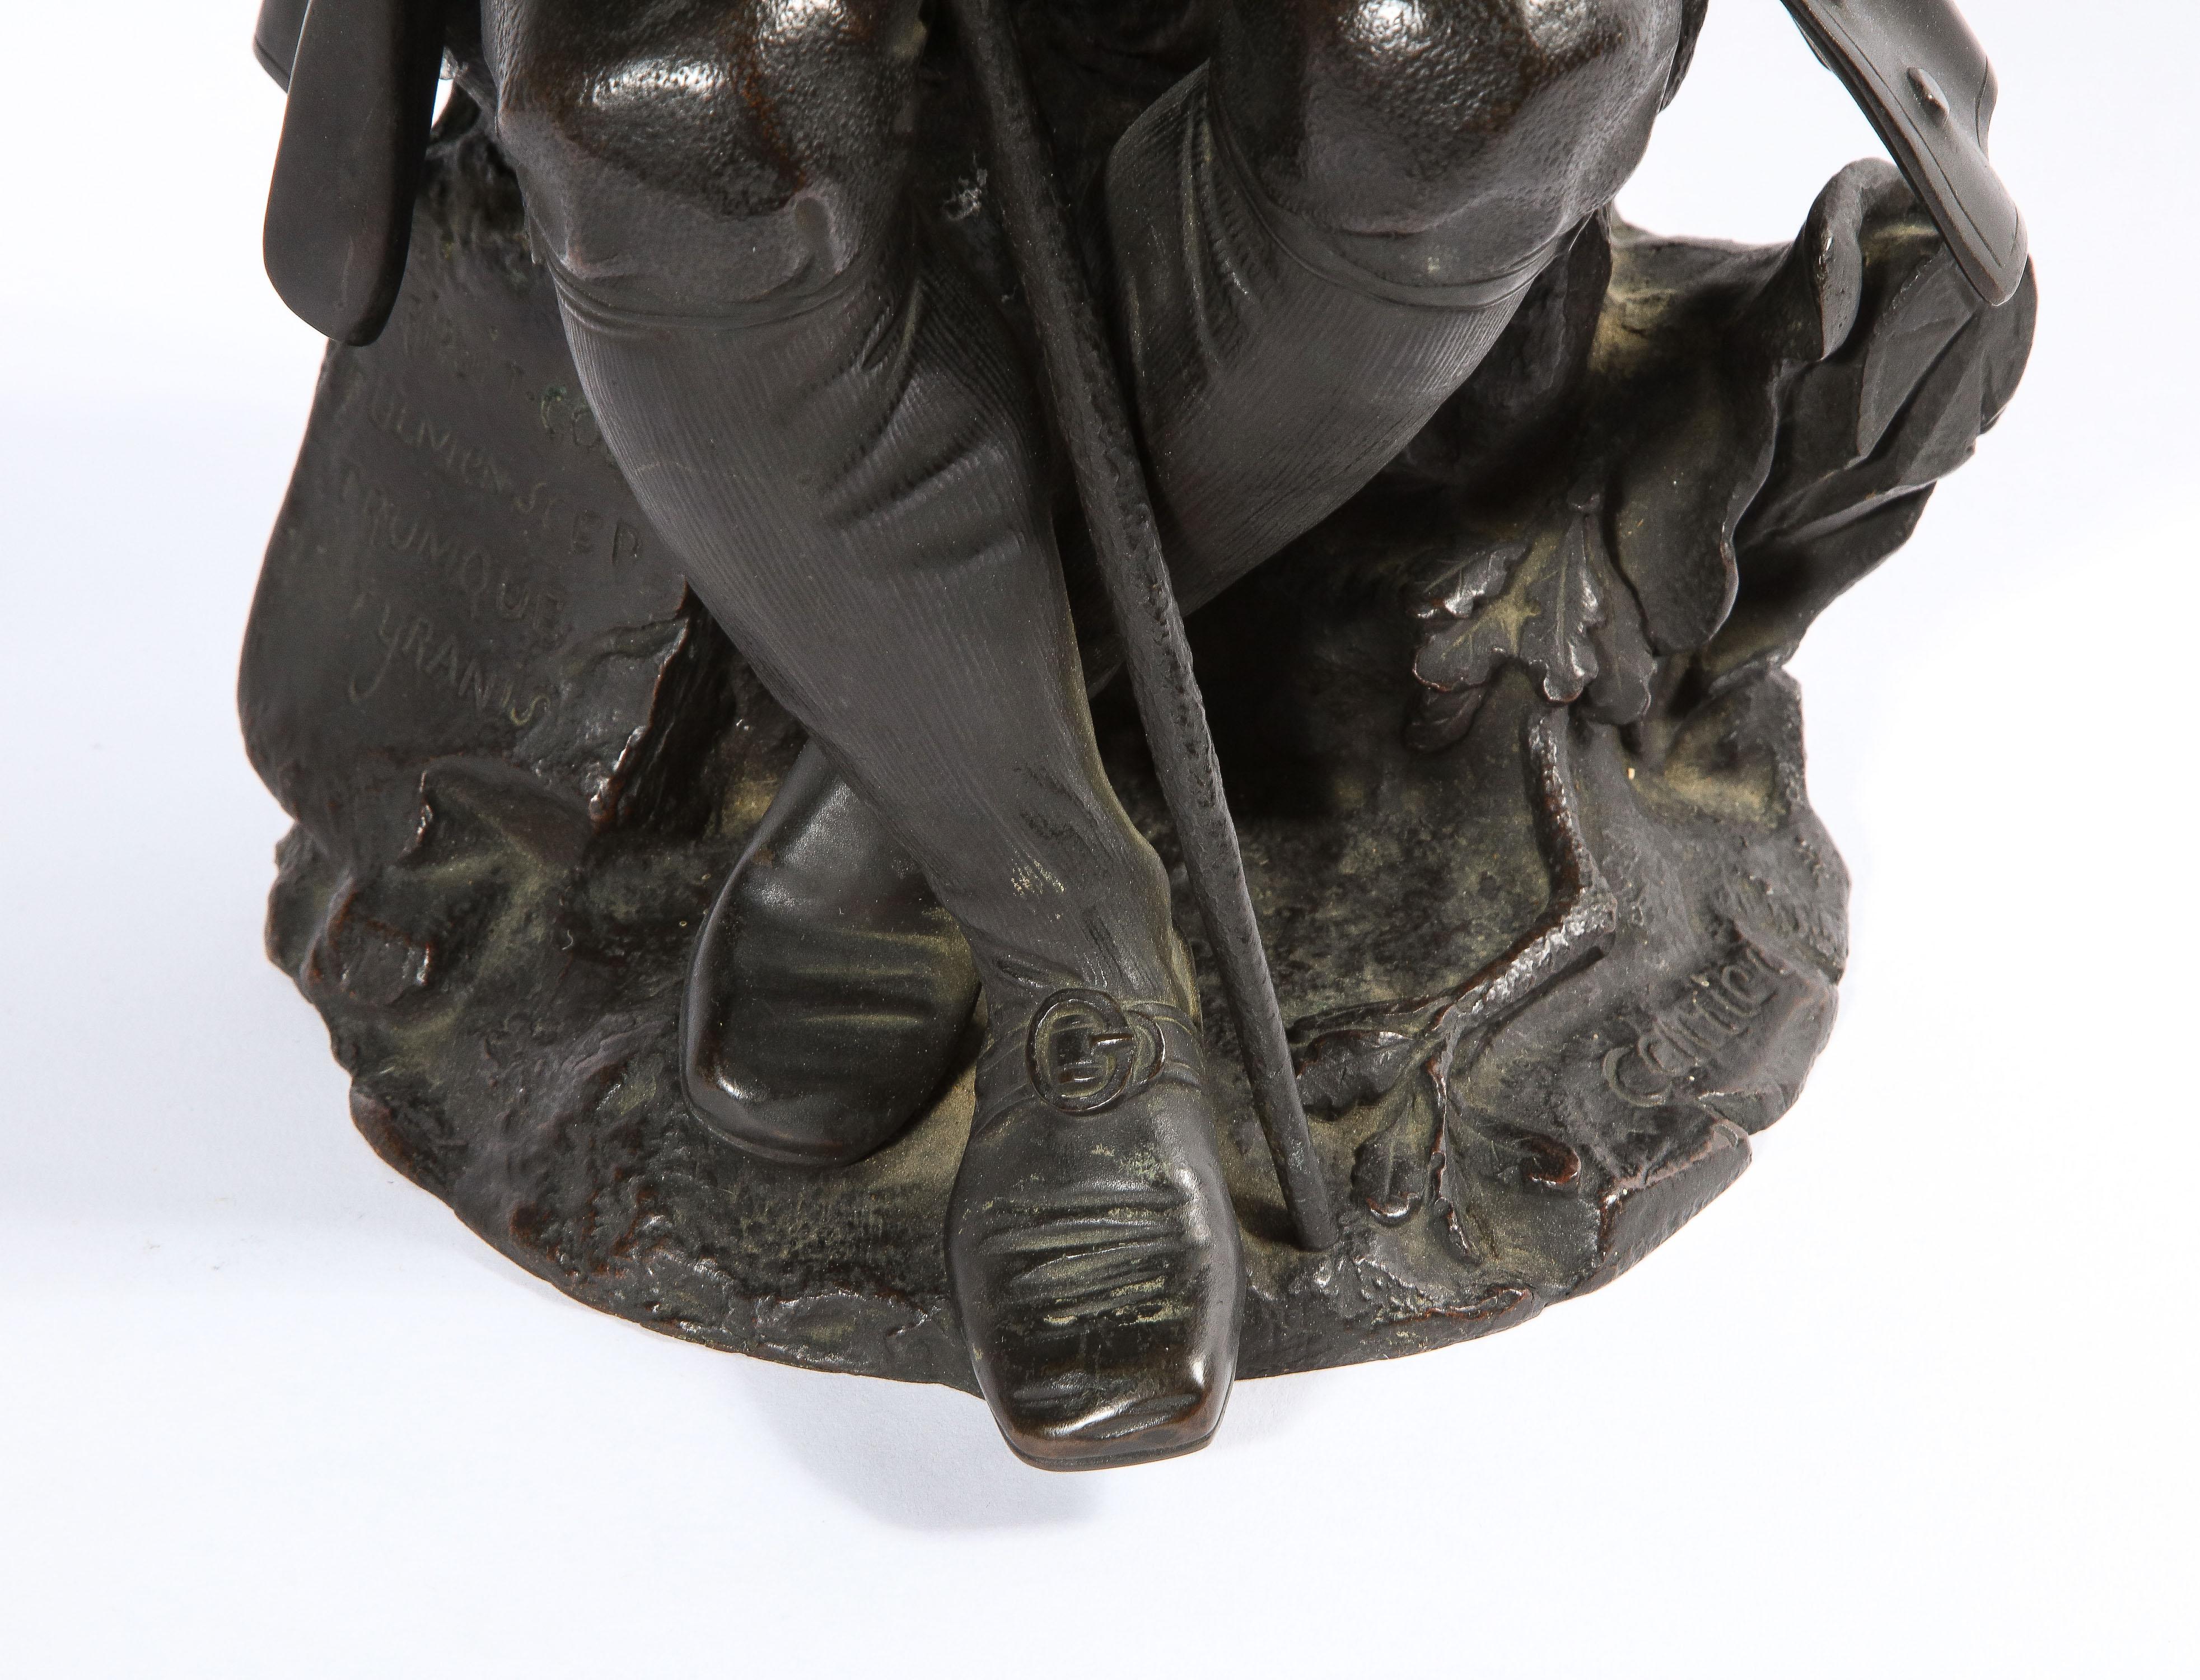 Rare sculpture en bronze patiné de Benjamin Franklin, par A. Carrier-Belleuse - Or Figurative Sculpture par Albert-Ernest Carrier-Belleuse